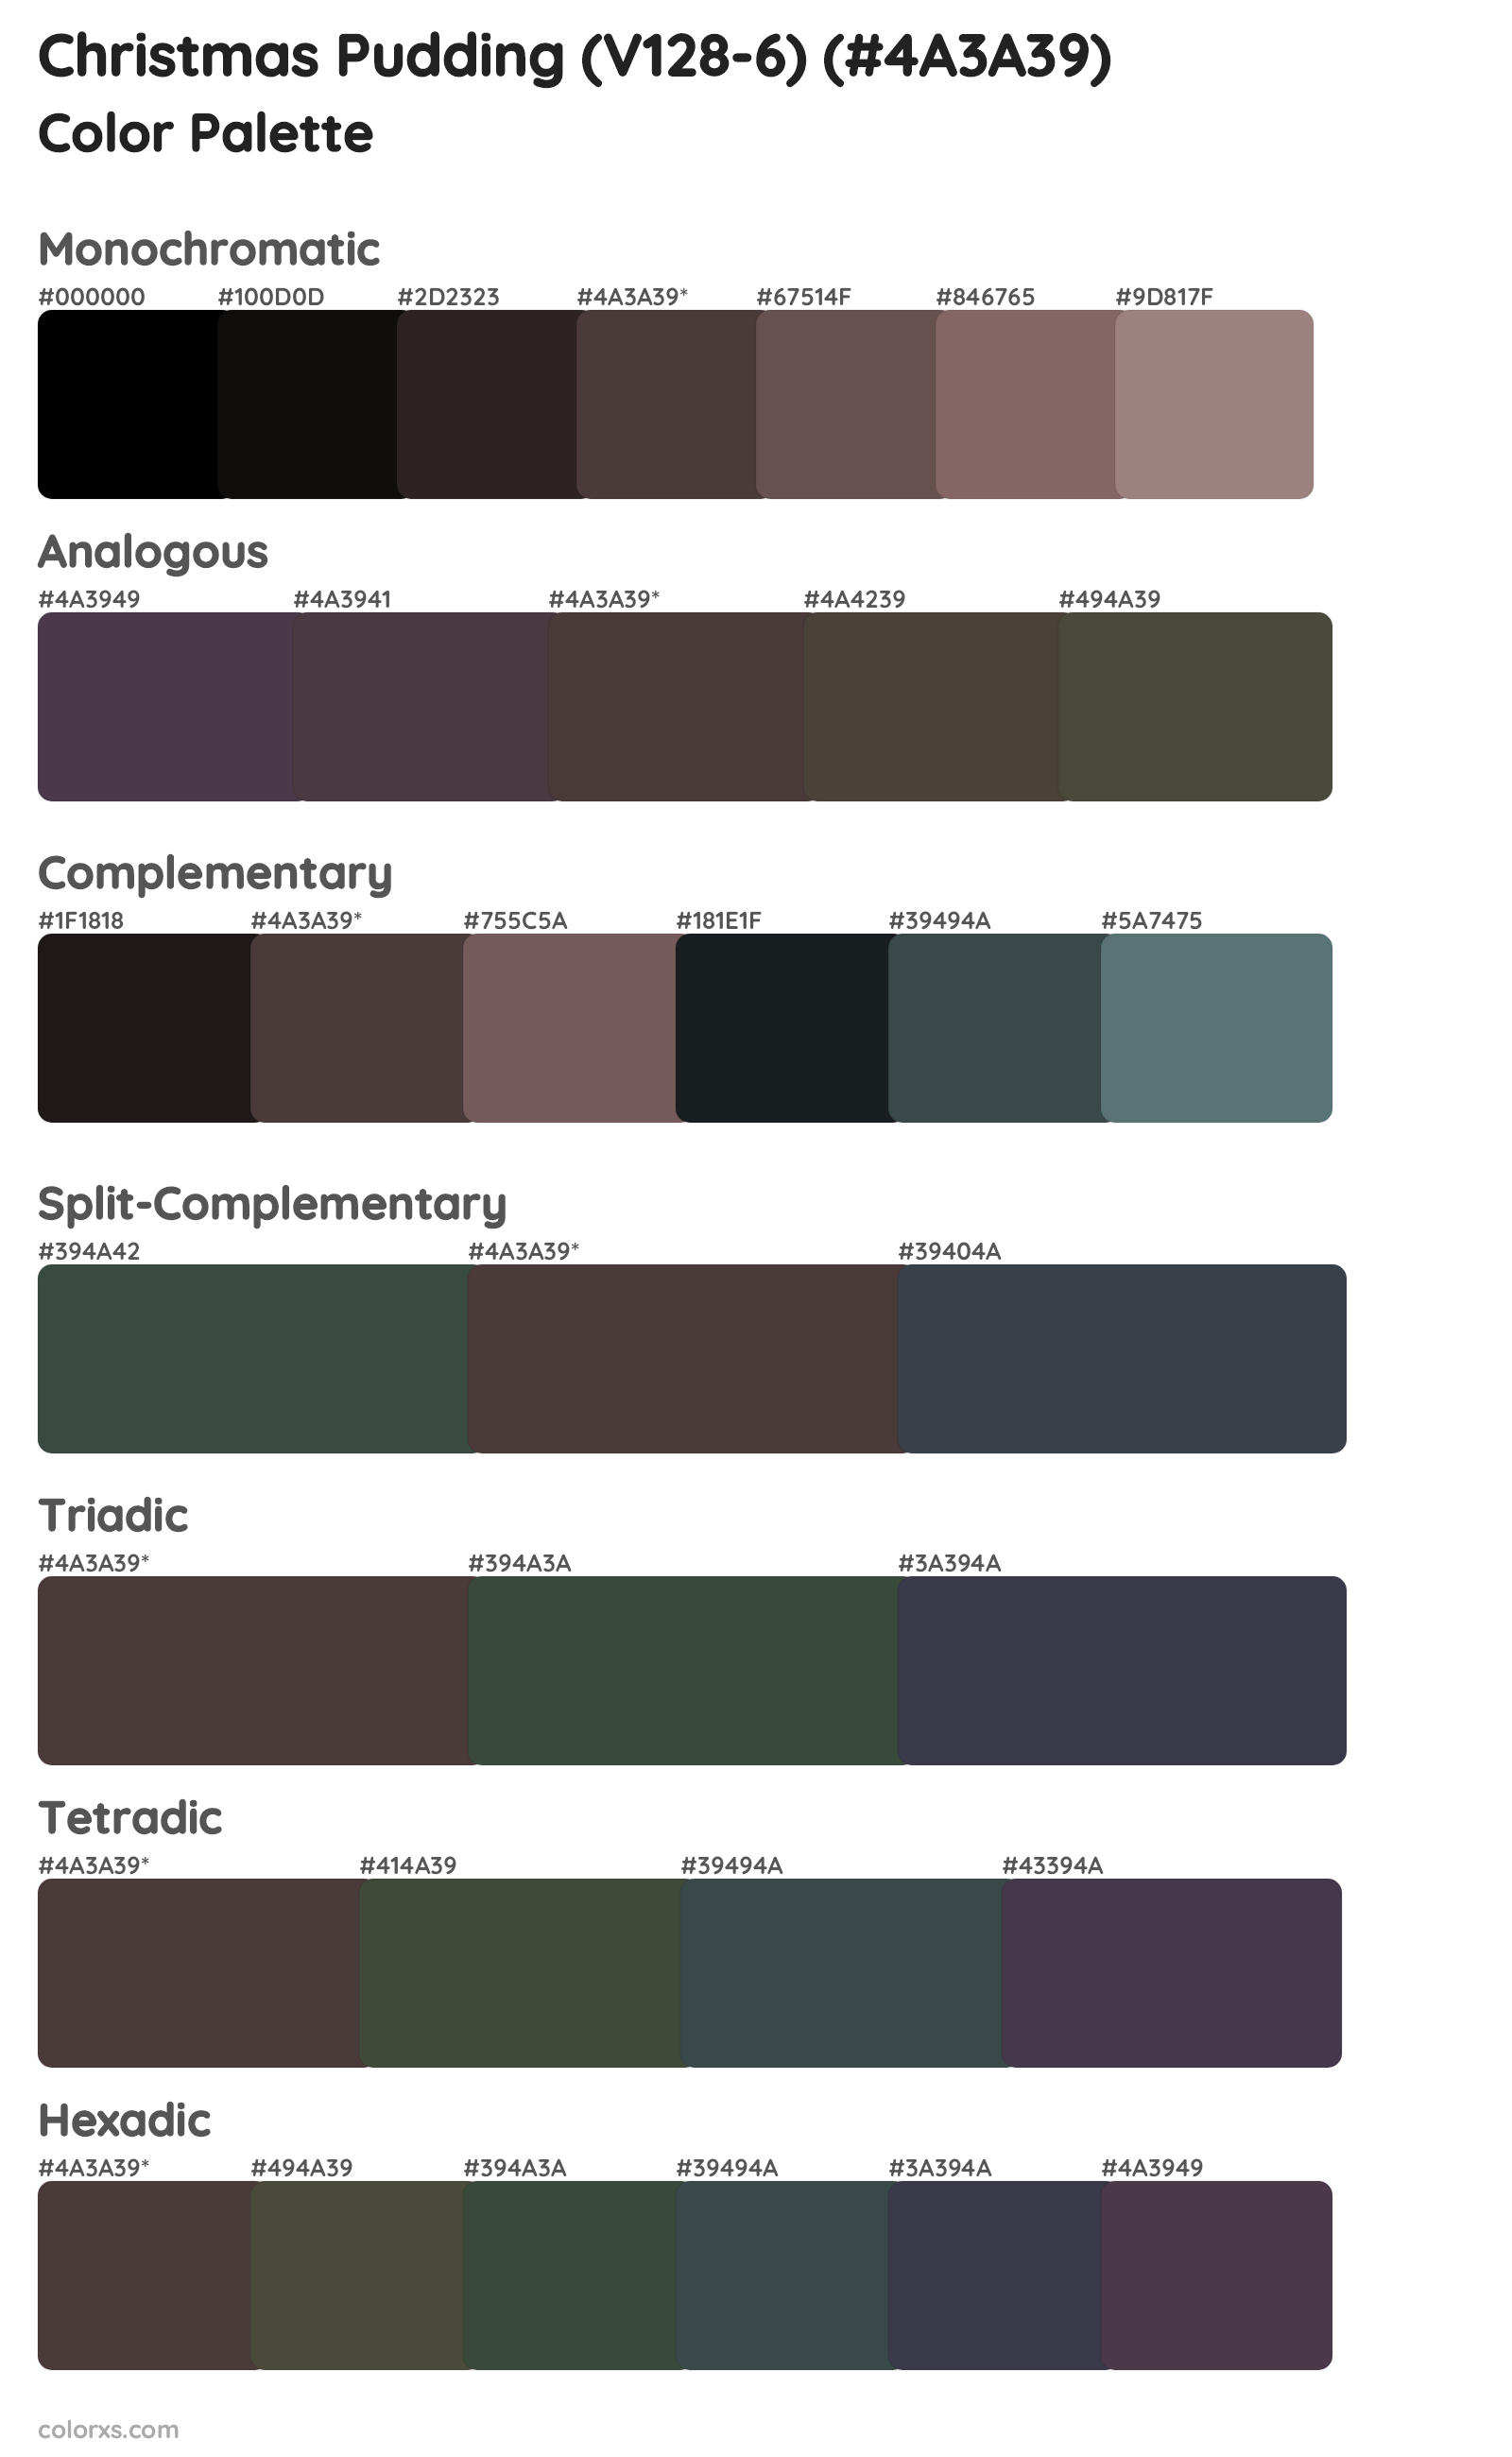 Christmas Pudding (V128-6) Color Scheme Palettes